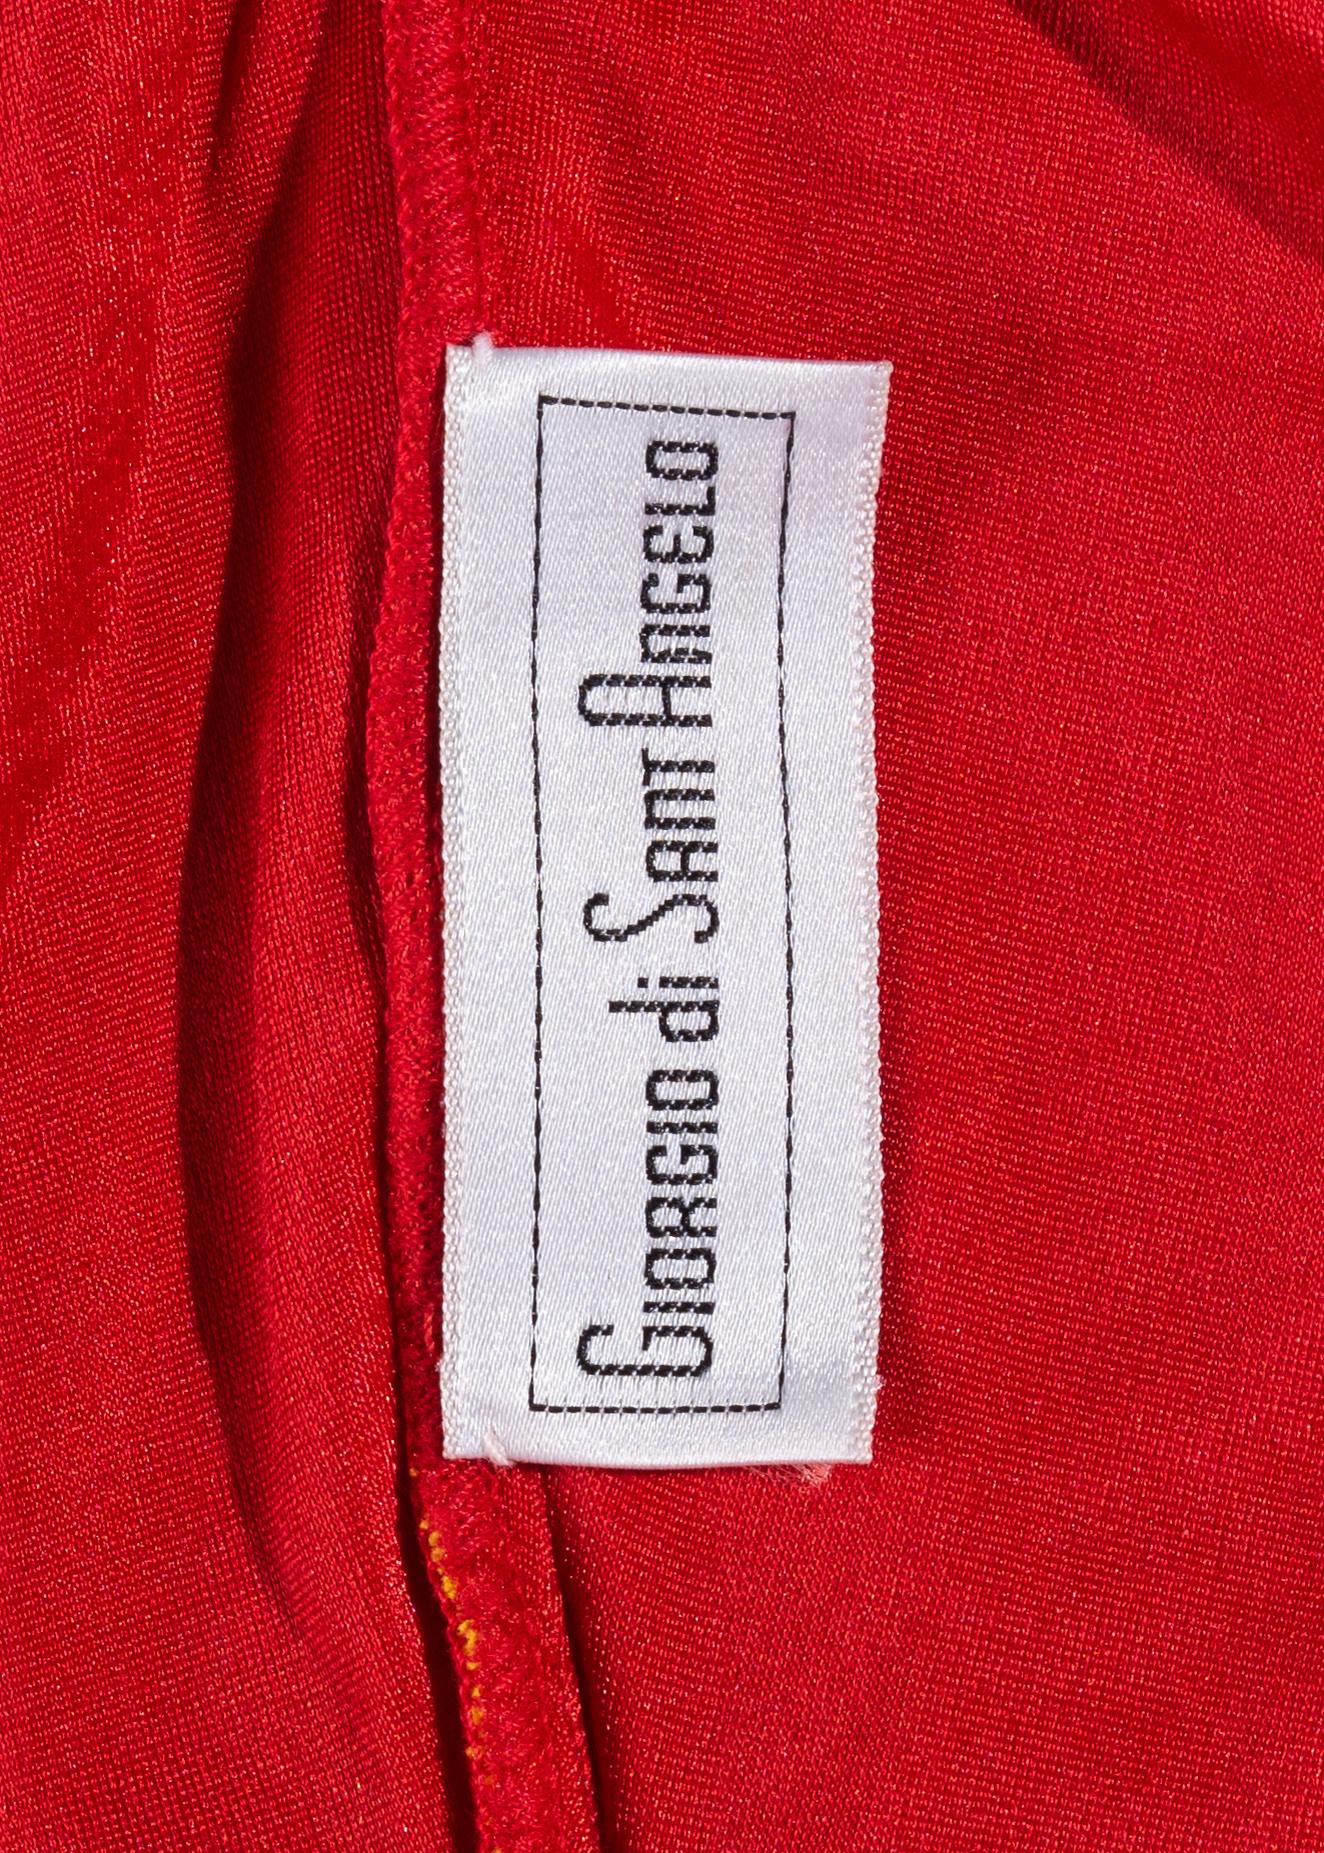 Giorgio di Sant Angelo yellow mesh halterneck bodysuit and skirt, ss 1991 1